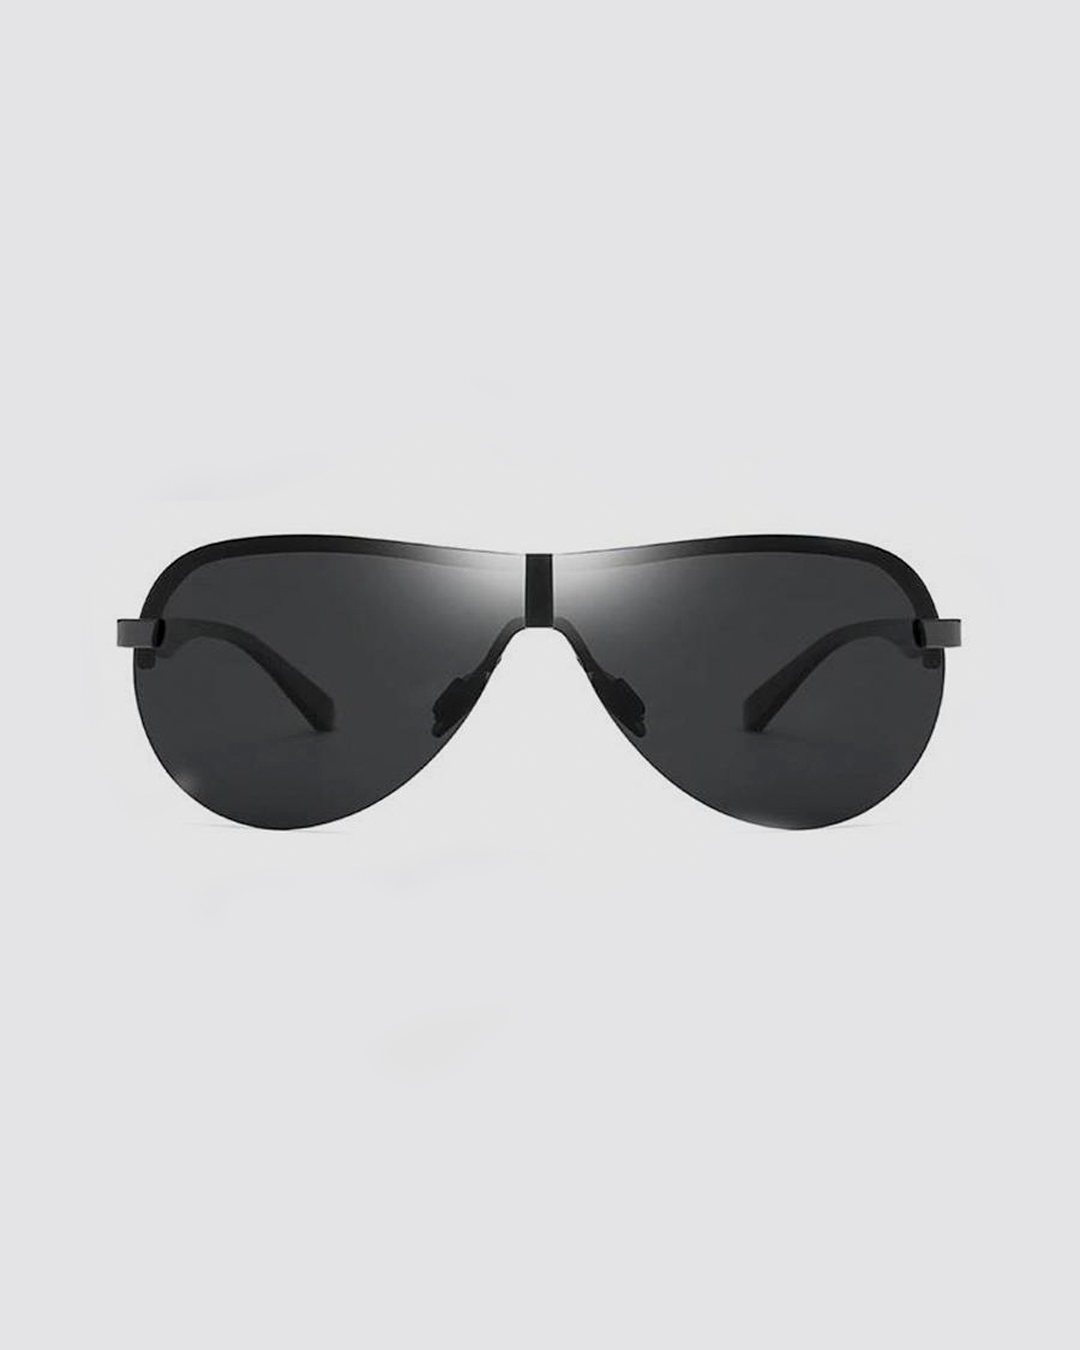 Daxter Sunglasses